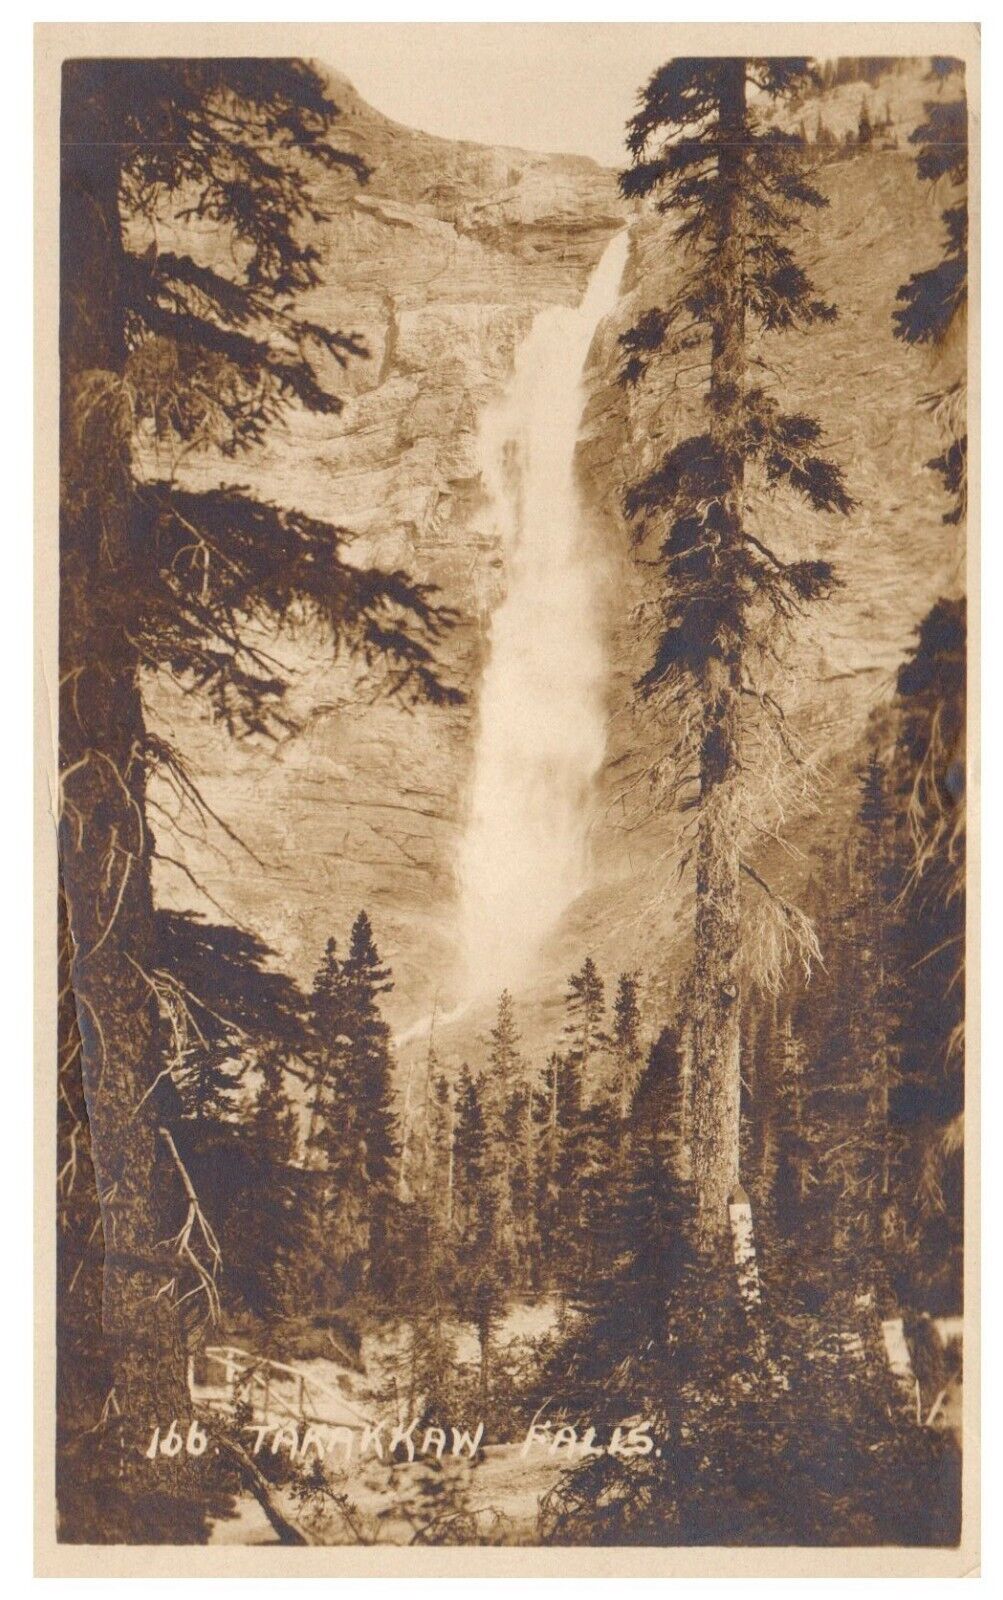 RPPC Takkakaw Falls British Columbia Canada Postcard Posted 1925